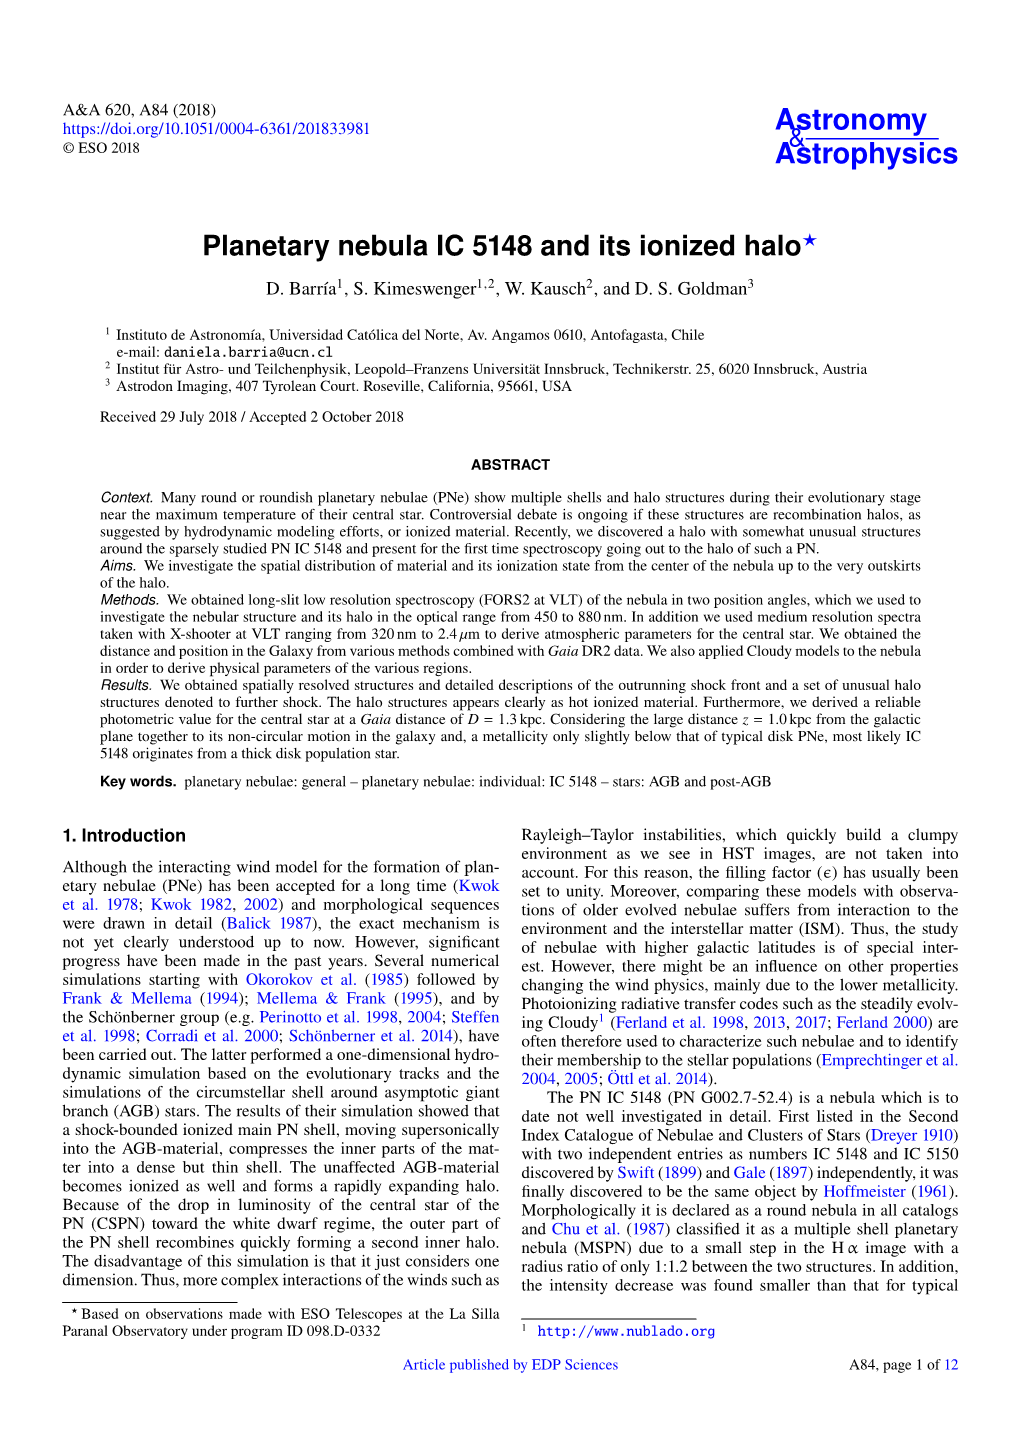 Planetary Nebula IC 5148 and Its Ionized Halo? D